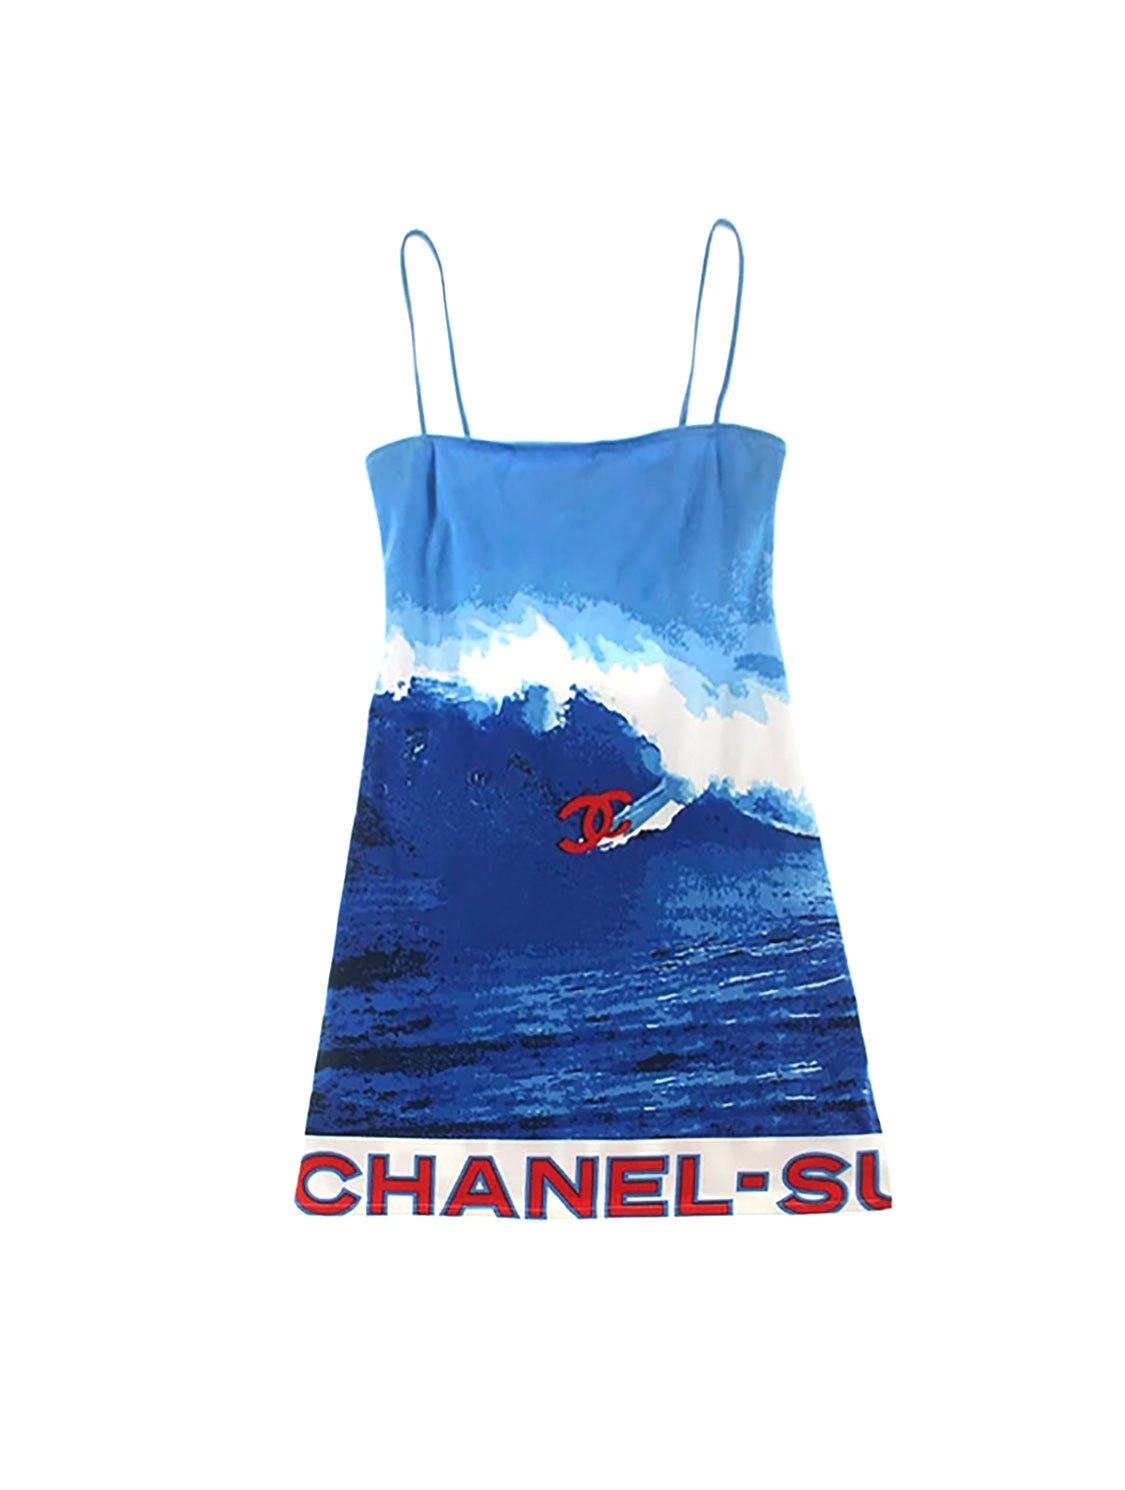 Chanel Surf SS 2002 Rare Mini Dress